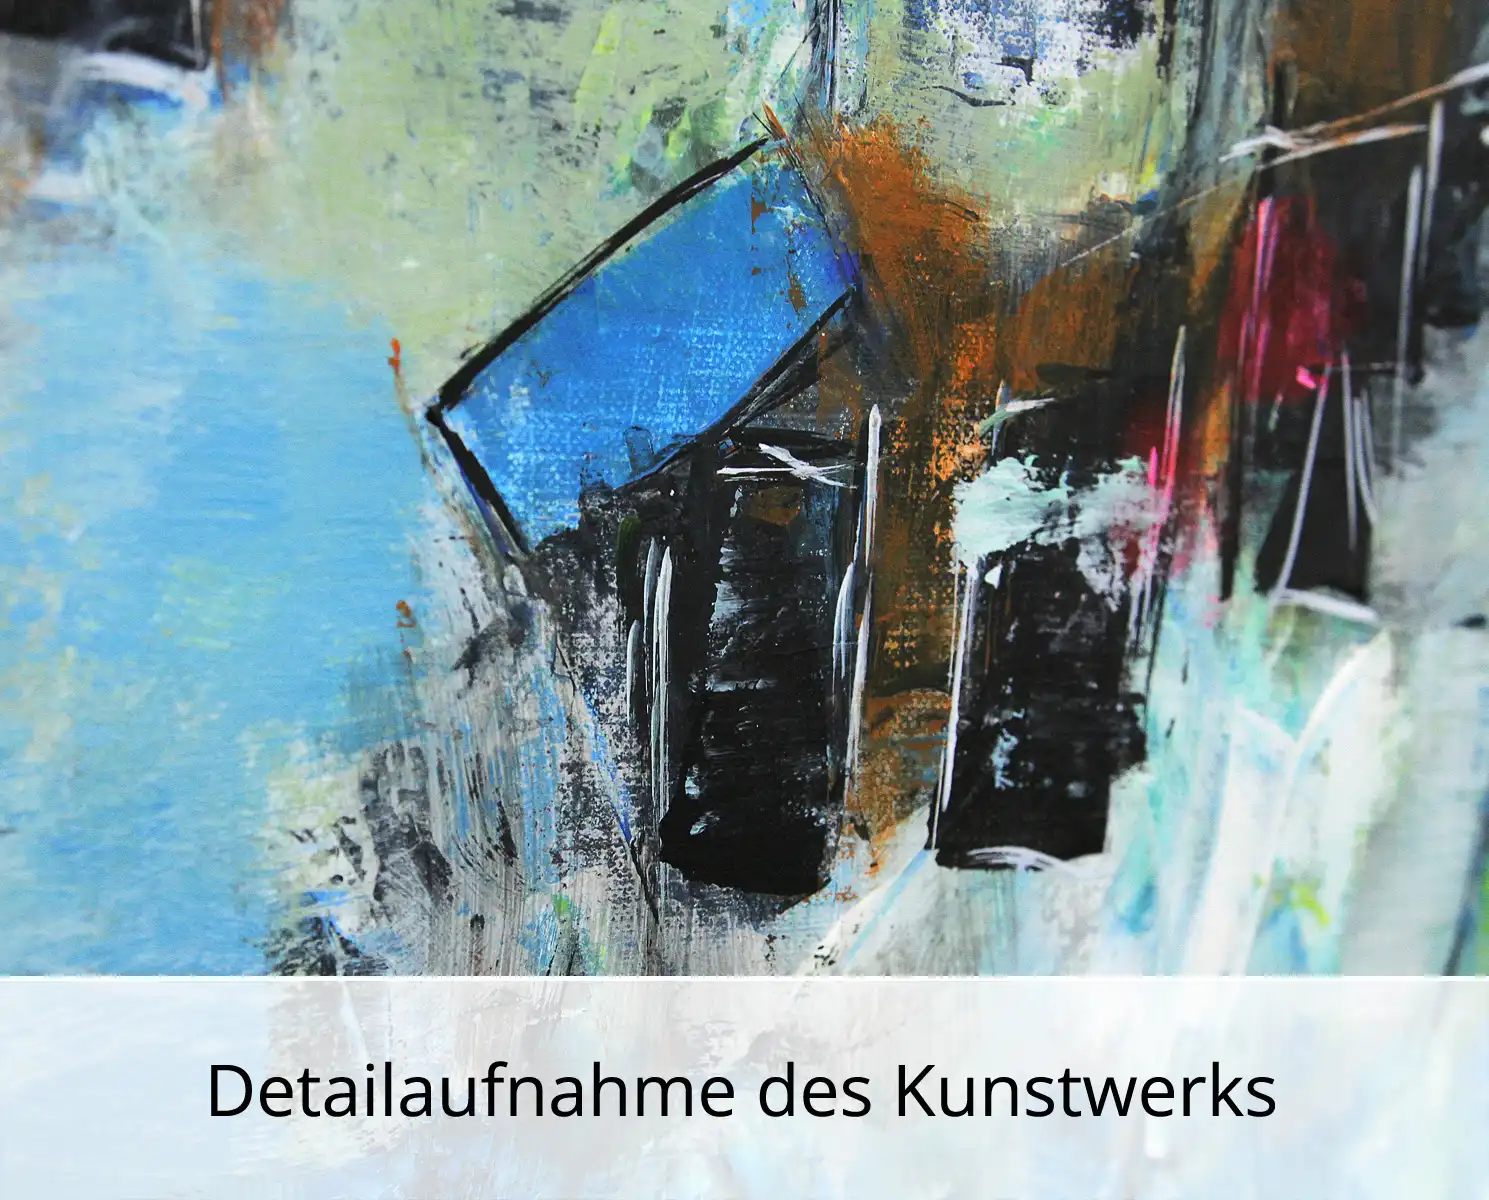 I. Schmidt: "Mysterious Places XII", zeitgenössische Grafik/Malerei, Original/Unikat